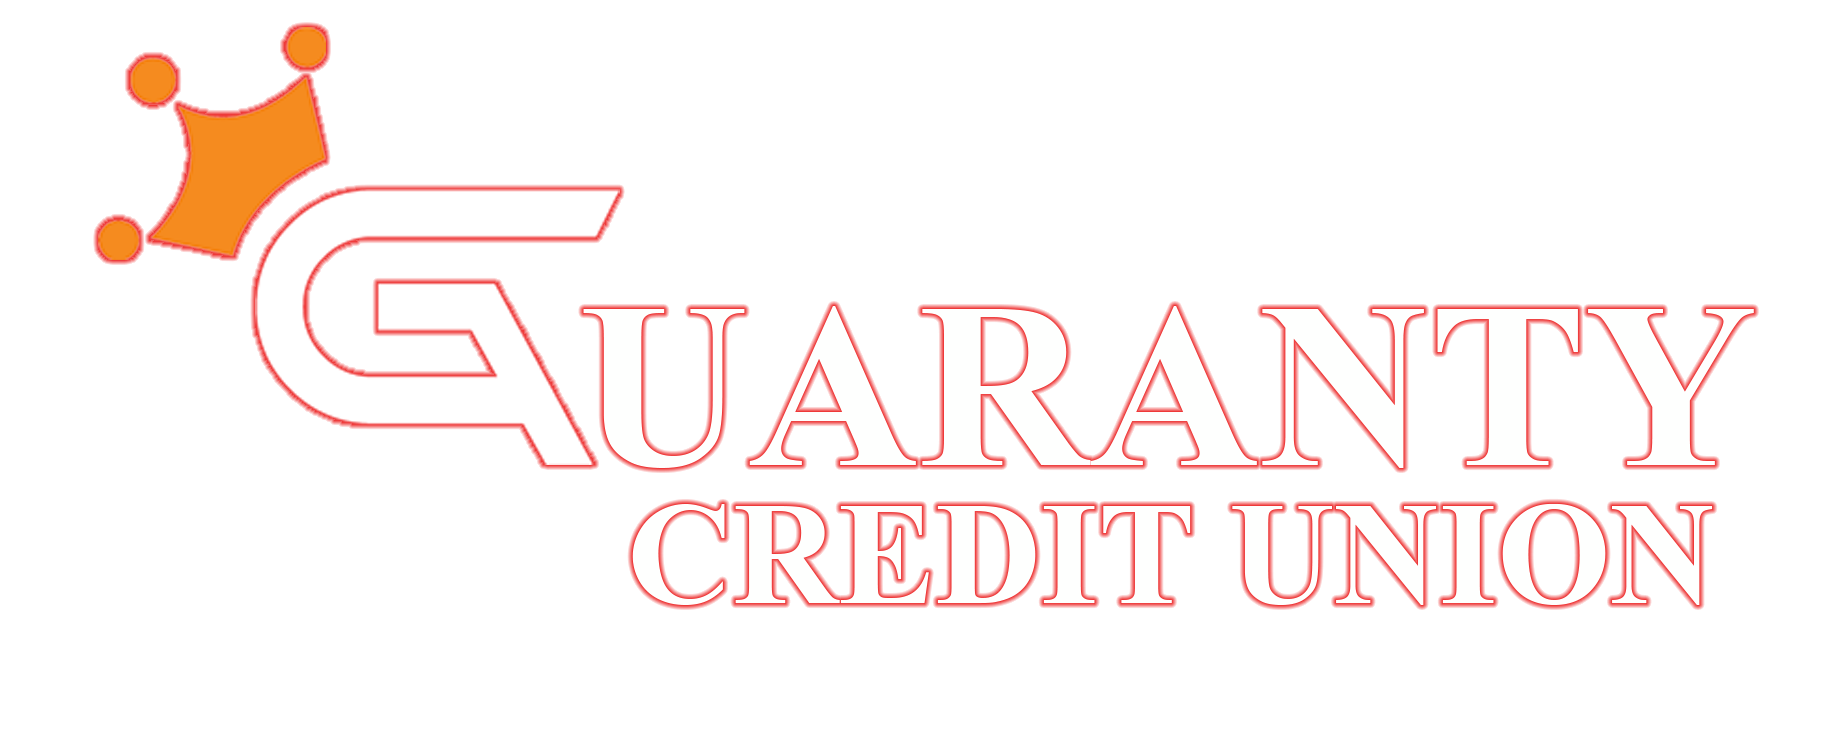 Guaranty Credit Union